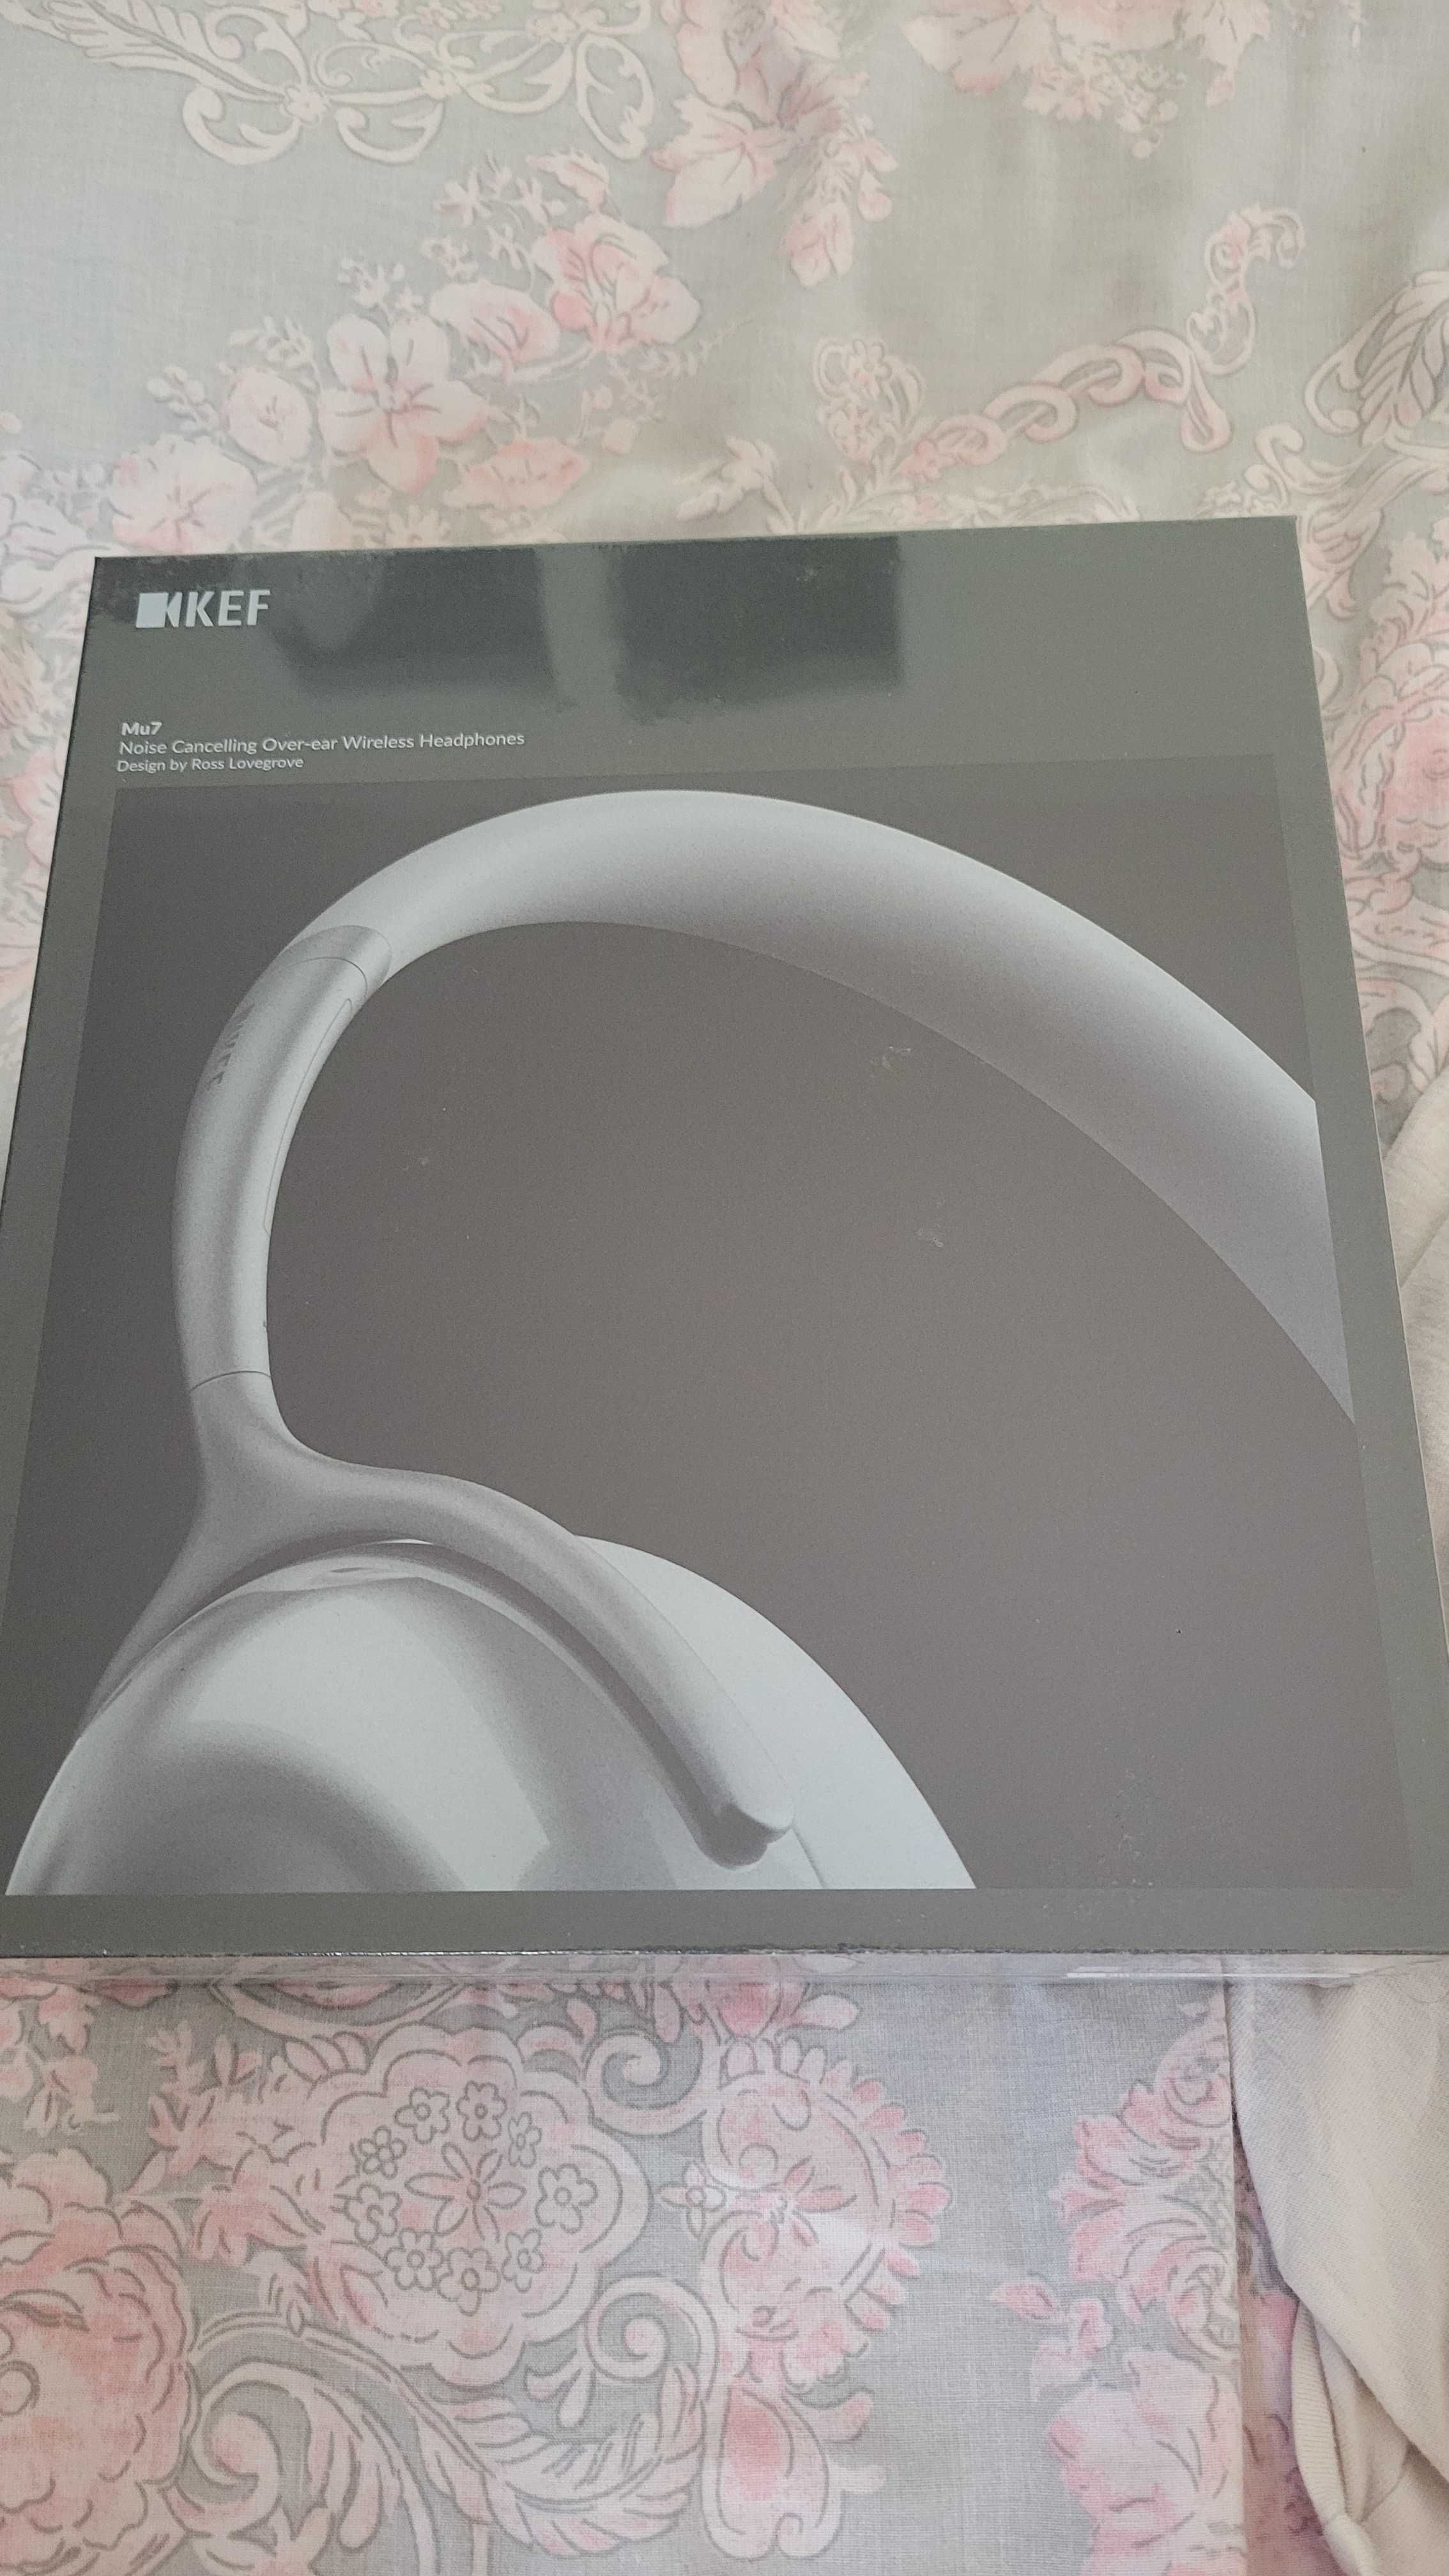 Уникални аудиофилски слушалки - Kef MU7 - чисто нови!